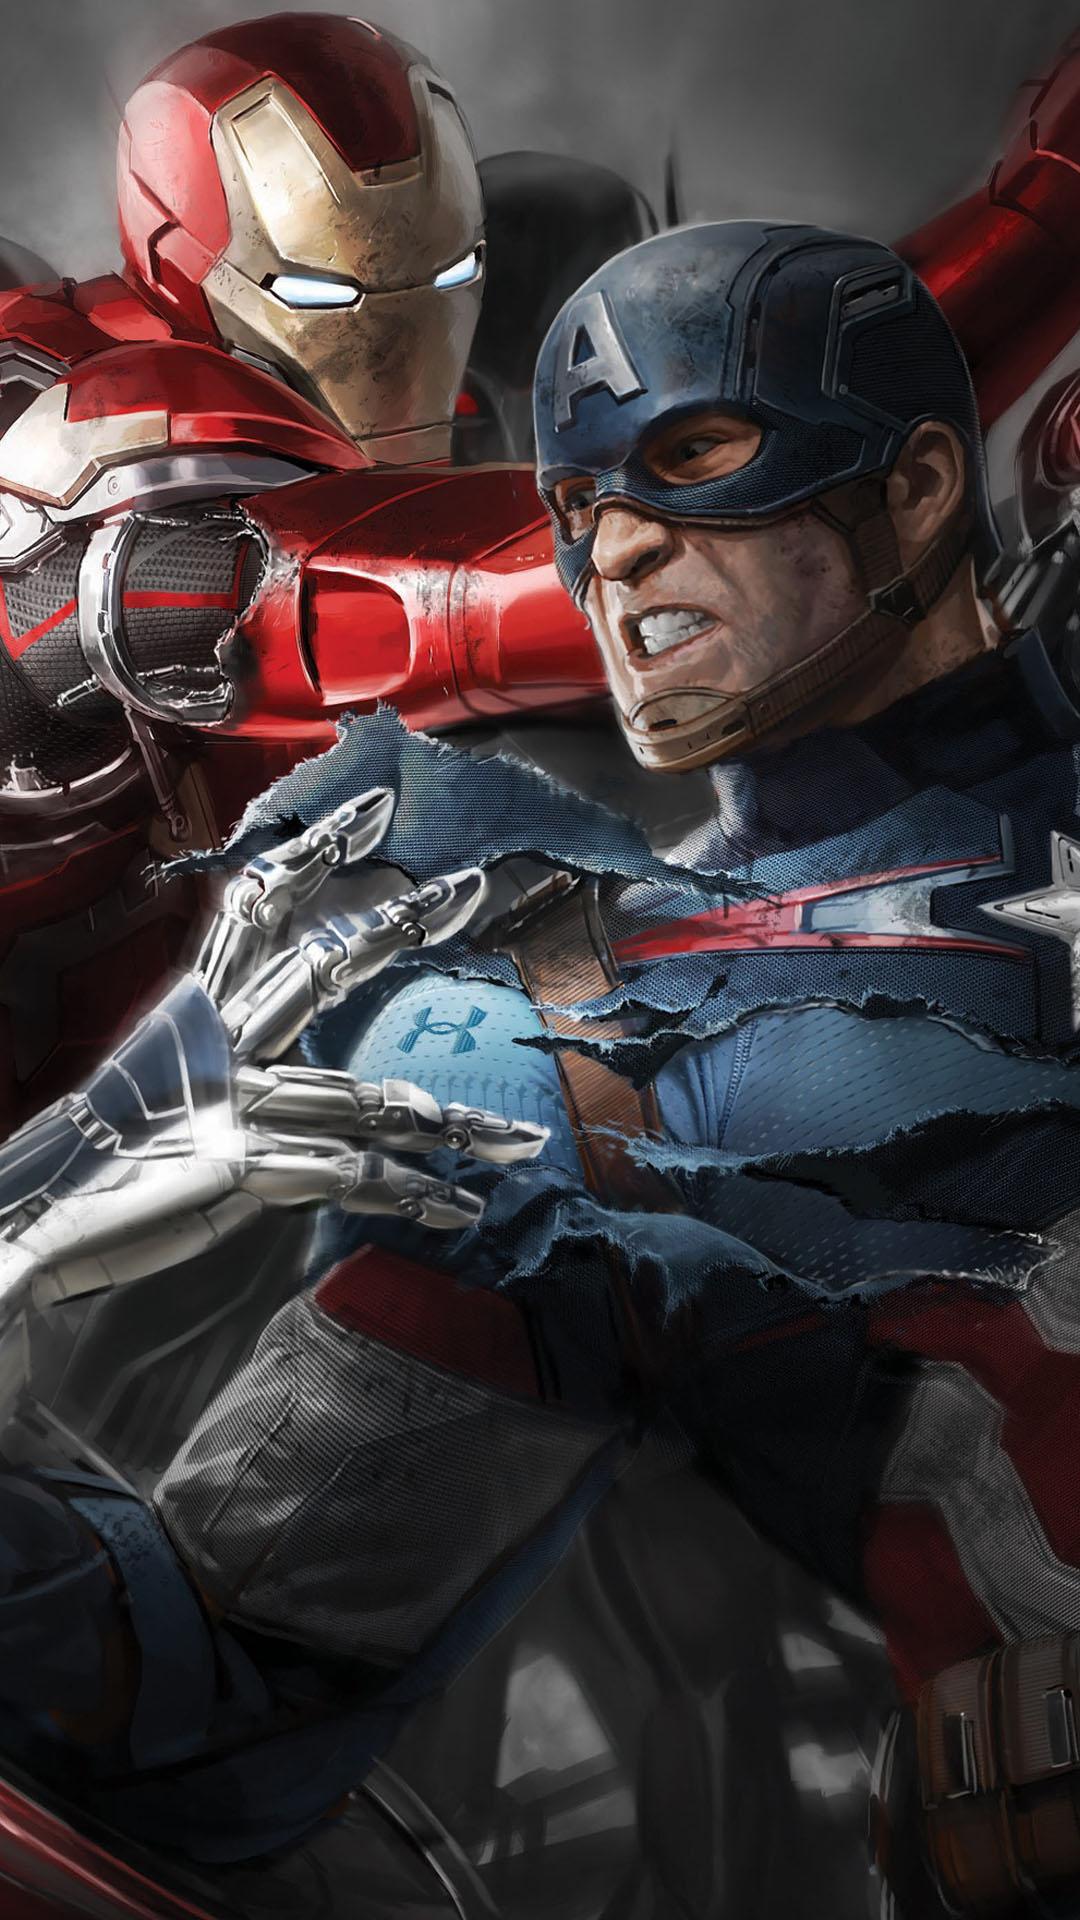 Avengers iPhone Wallpaper